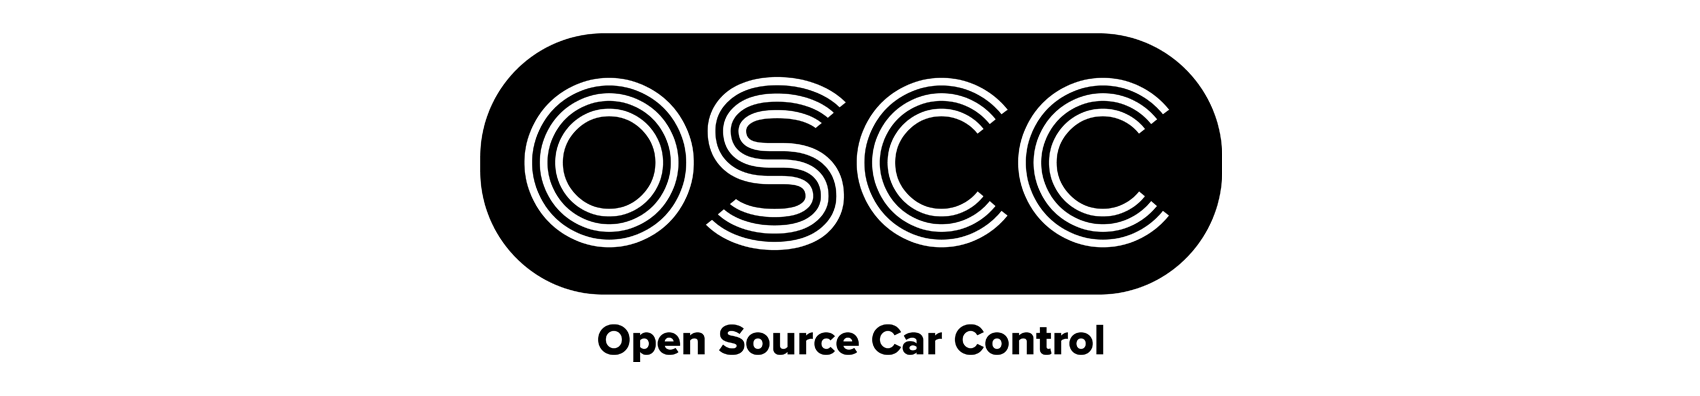 Oscc logo title.png